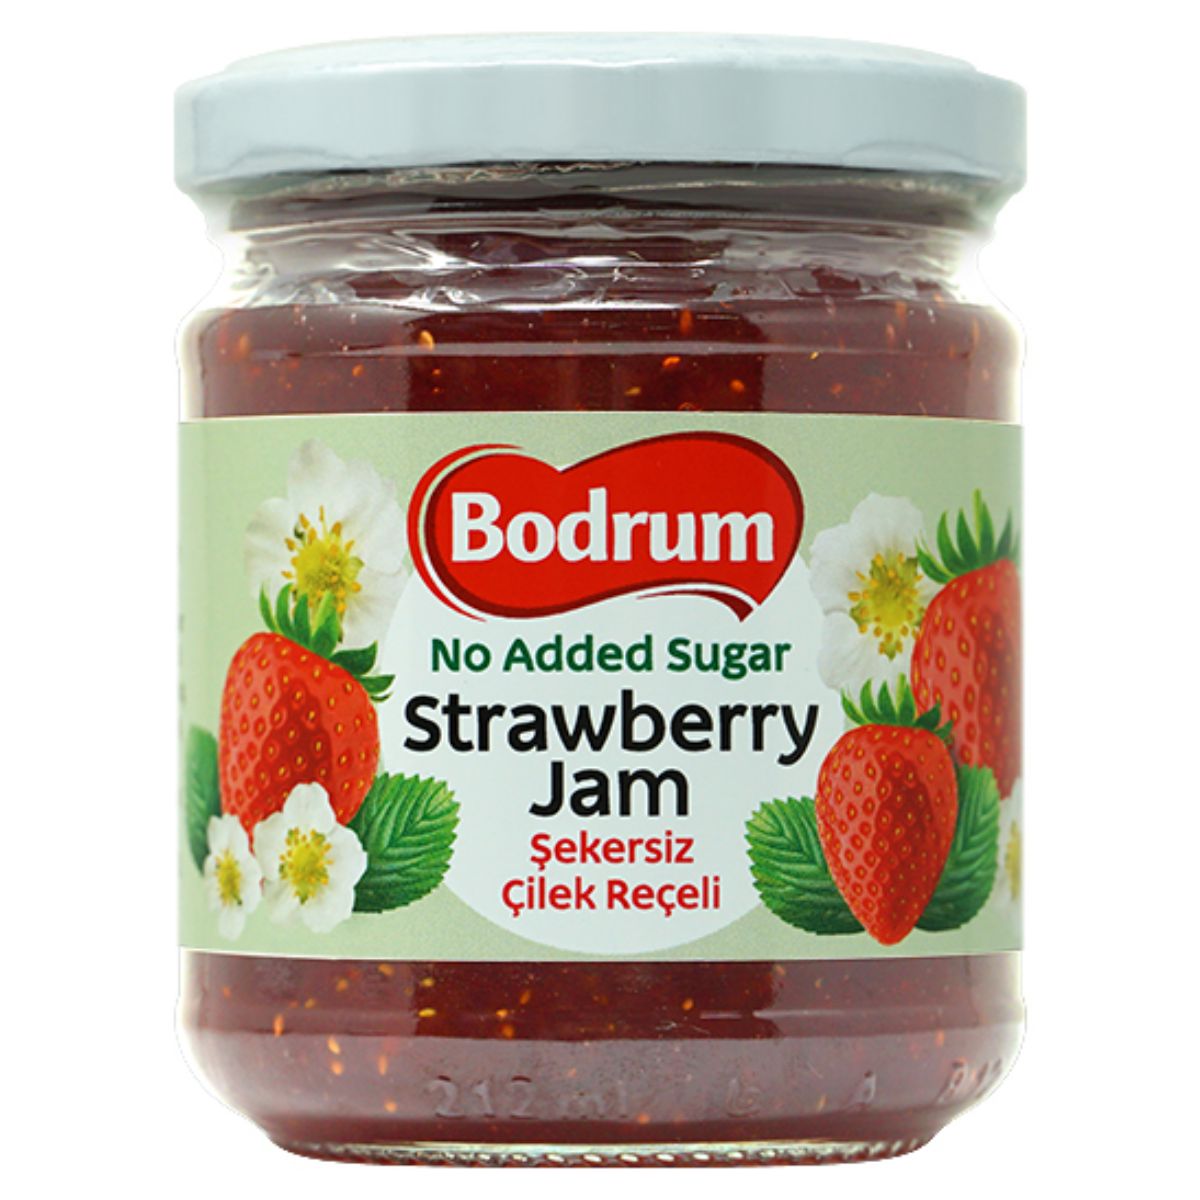 A jar of Bodrum - Strawberry Jam - 240g.